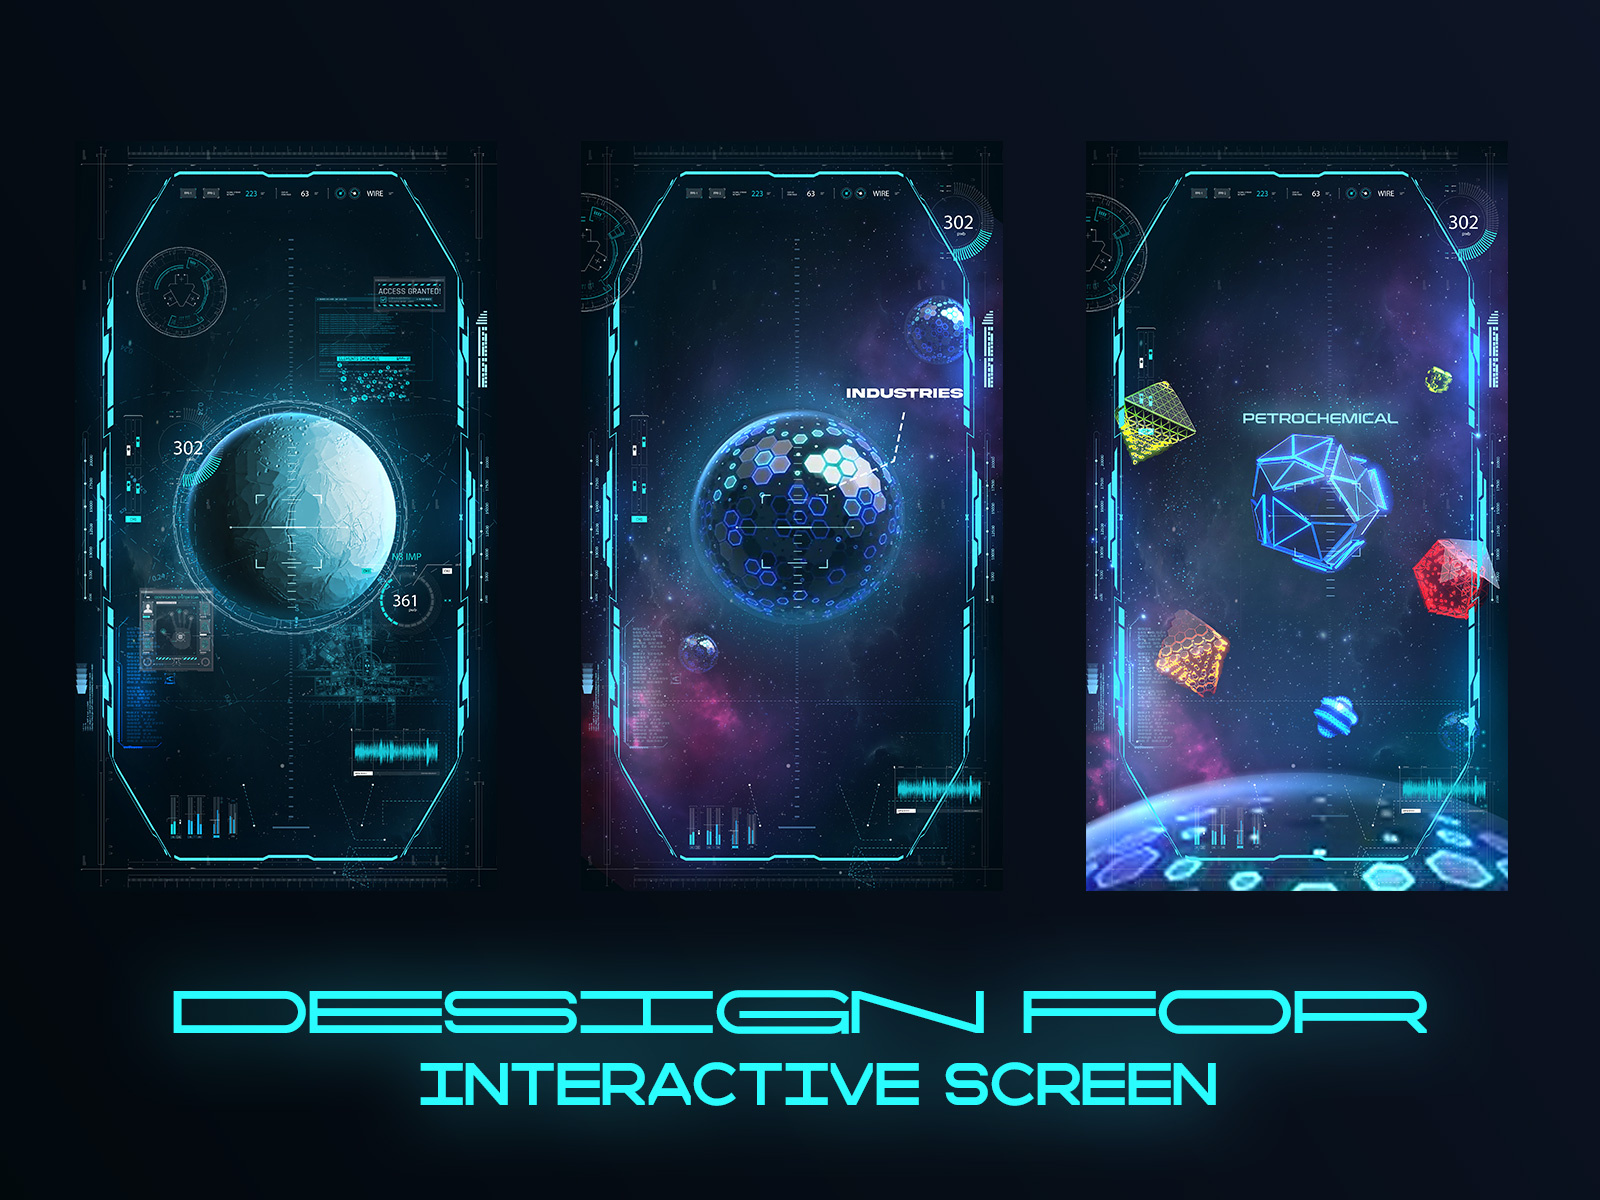 Design for Interactive screen by Ahmfar ✨ on Dribbble